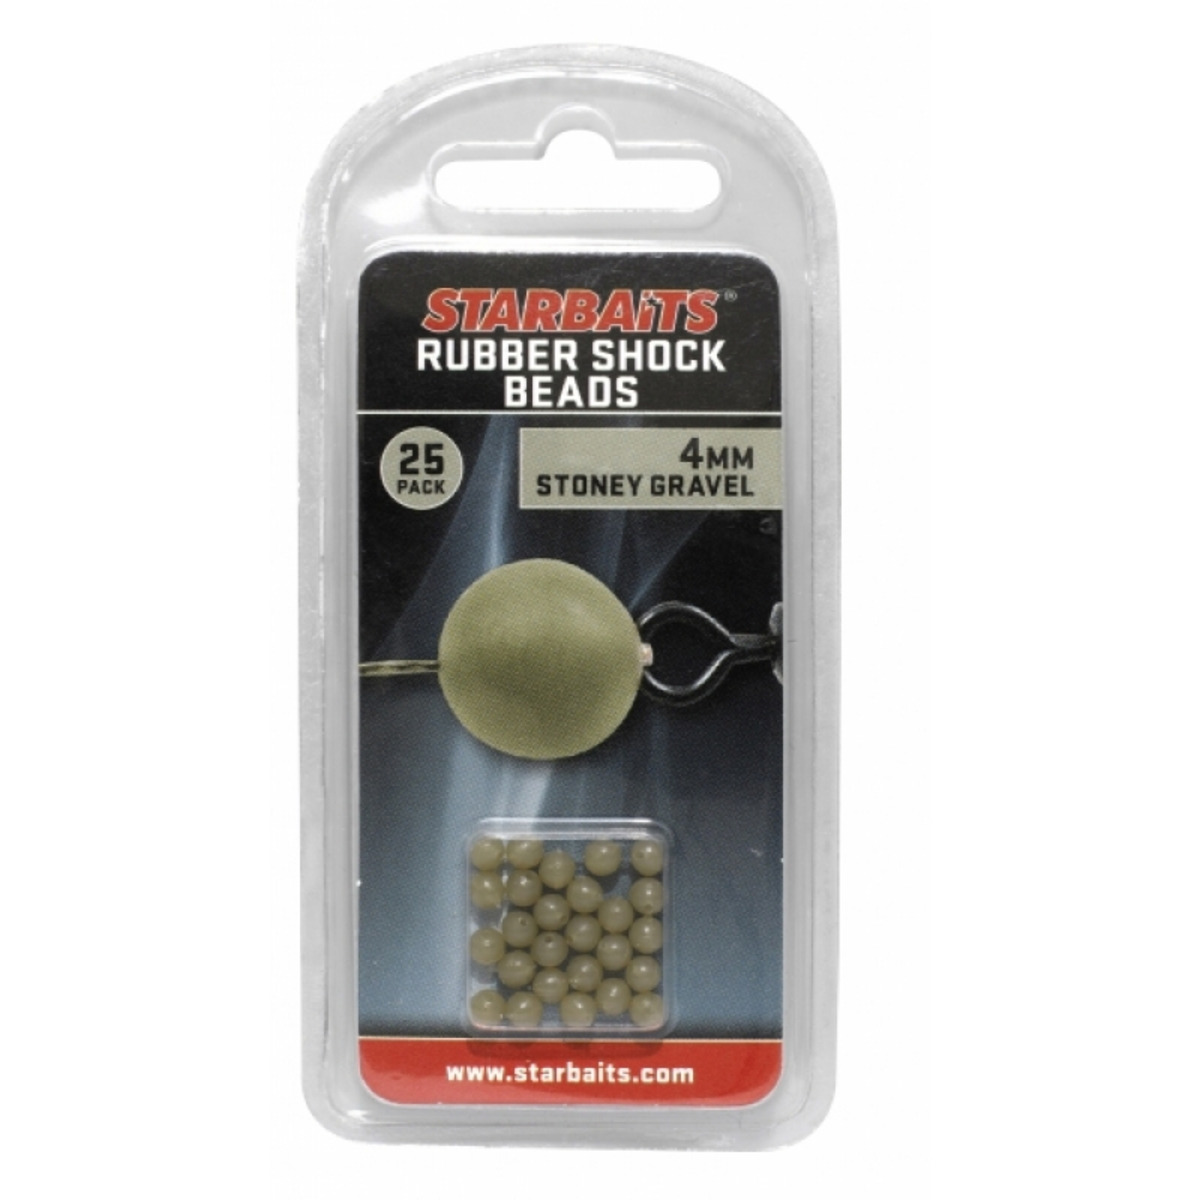 Starbaits Rubber Schock Beads 4mm - STONEY GRAVEL